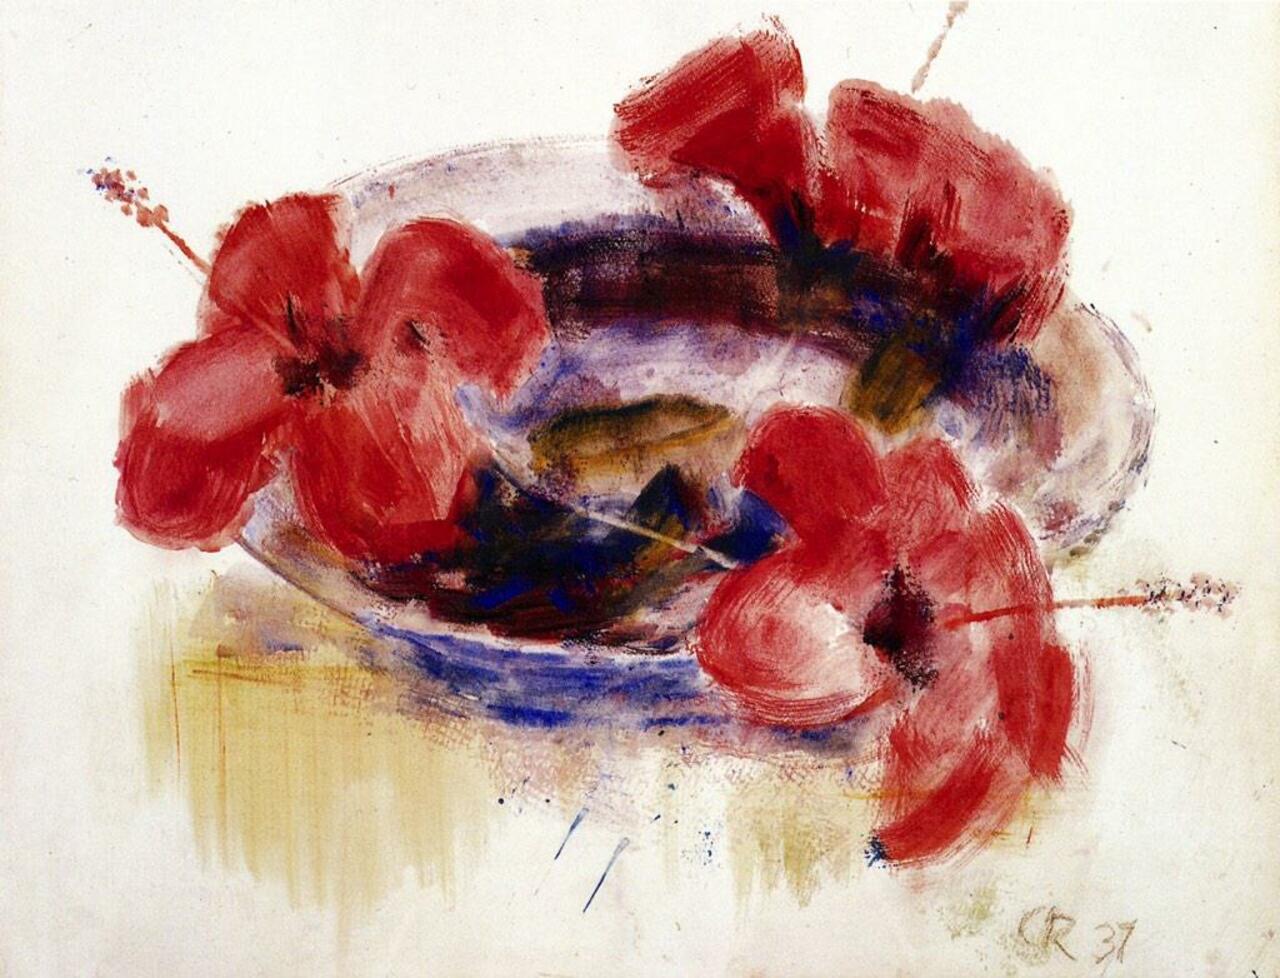 “ 'Hibiscus Blooms in a Glass Bowl'
Christian Rohlfs, 1937 #art http://t.co/dL160DxnFd” | Rt @geminicat7